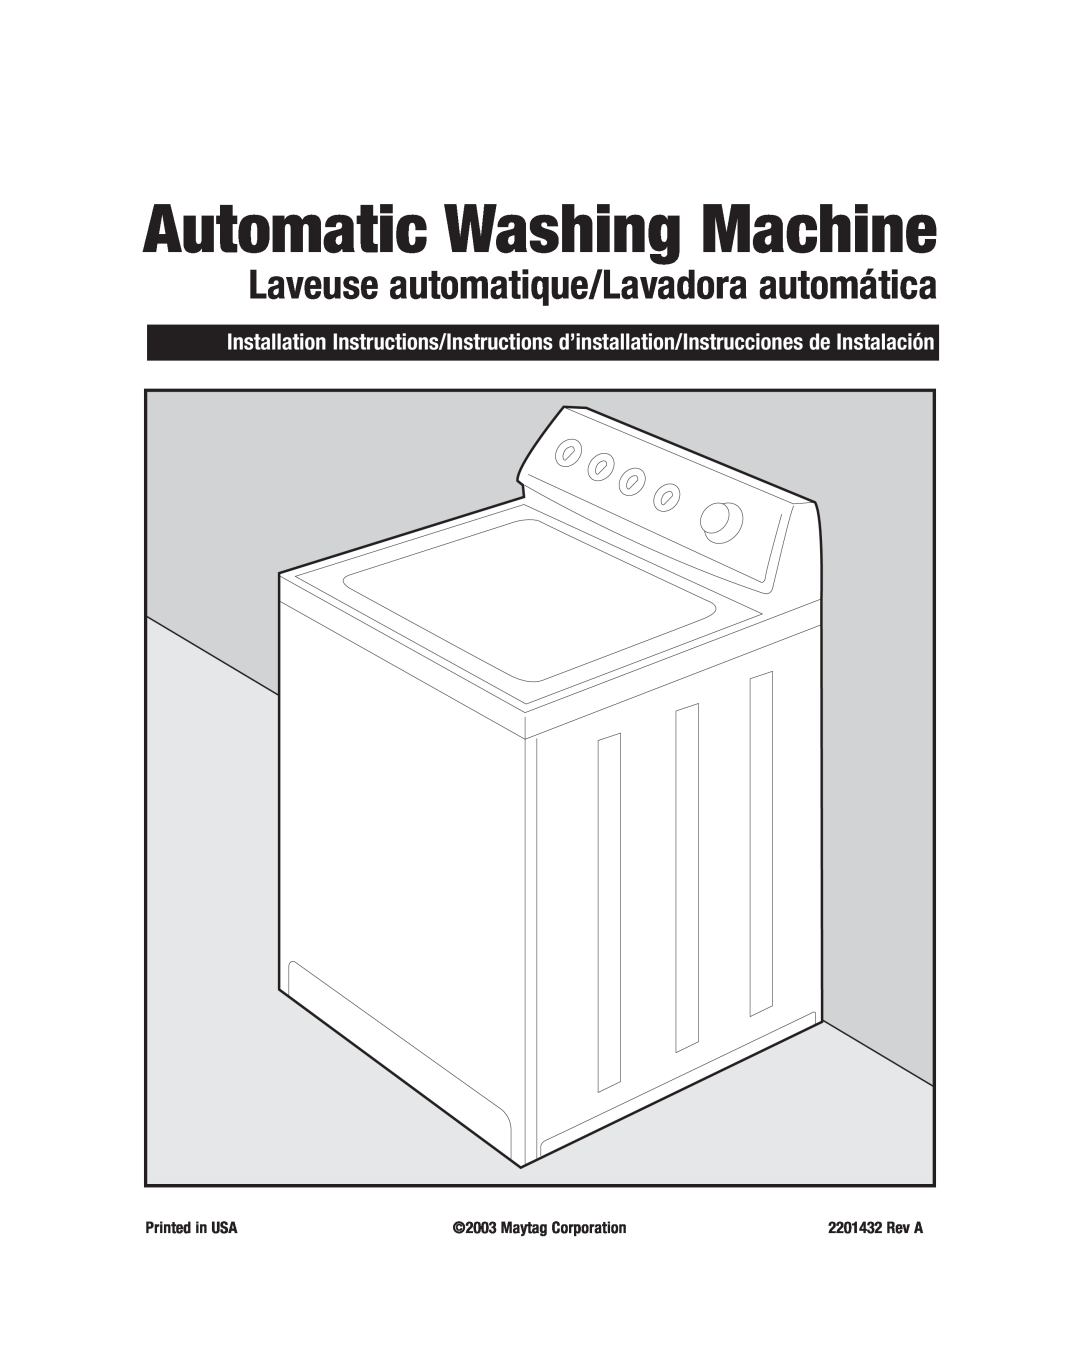 Maytag 2201432 installation instructions Automatic Washing Machine, Laveuse automatique/Lavadora automática, Rev A 